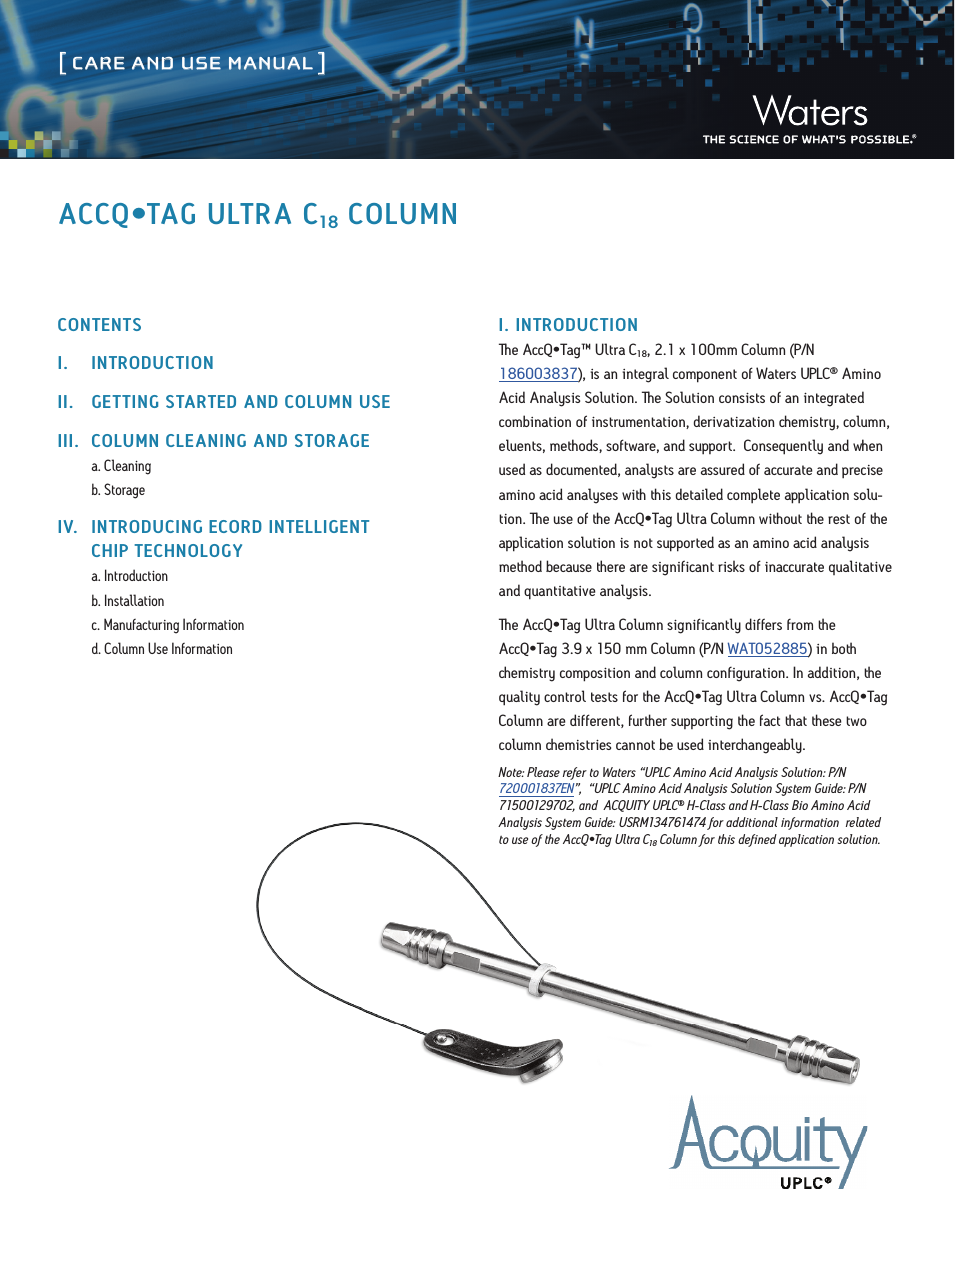 AccQ-Tag Ultra C18 Column